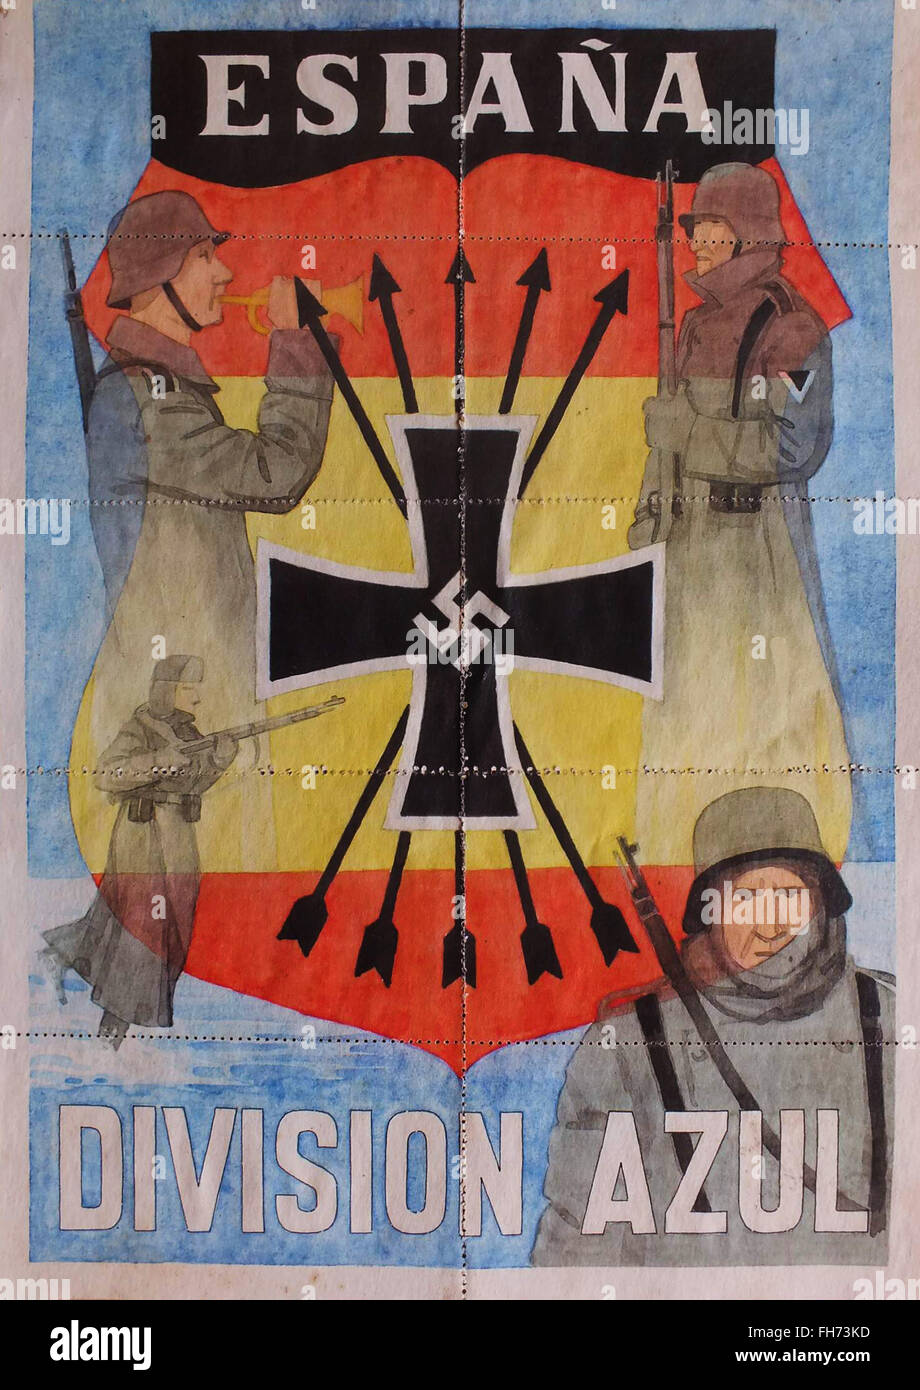 España - Division Azul - German Nazi Propaganda Poster - WWII Stock Photo